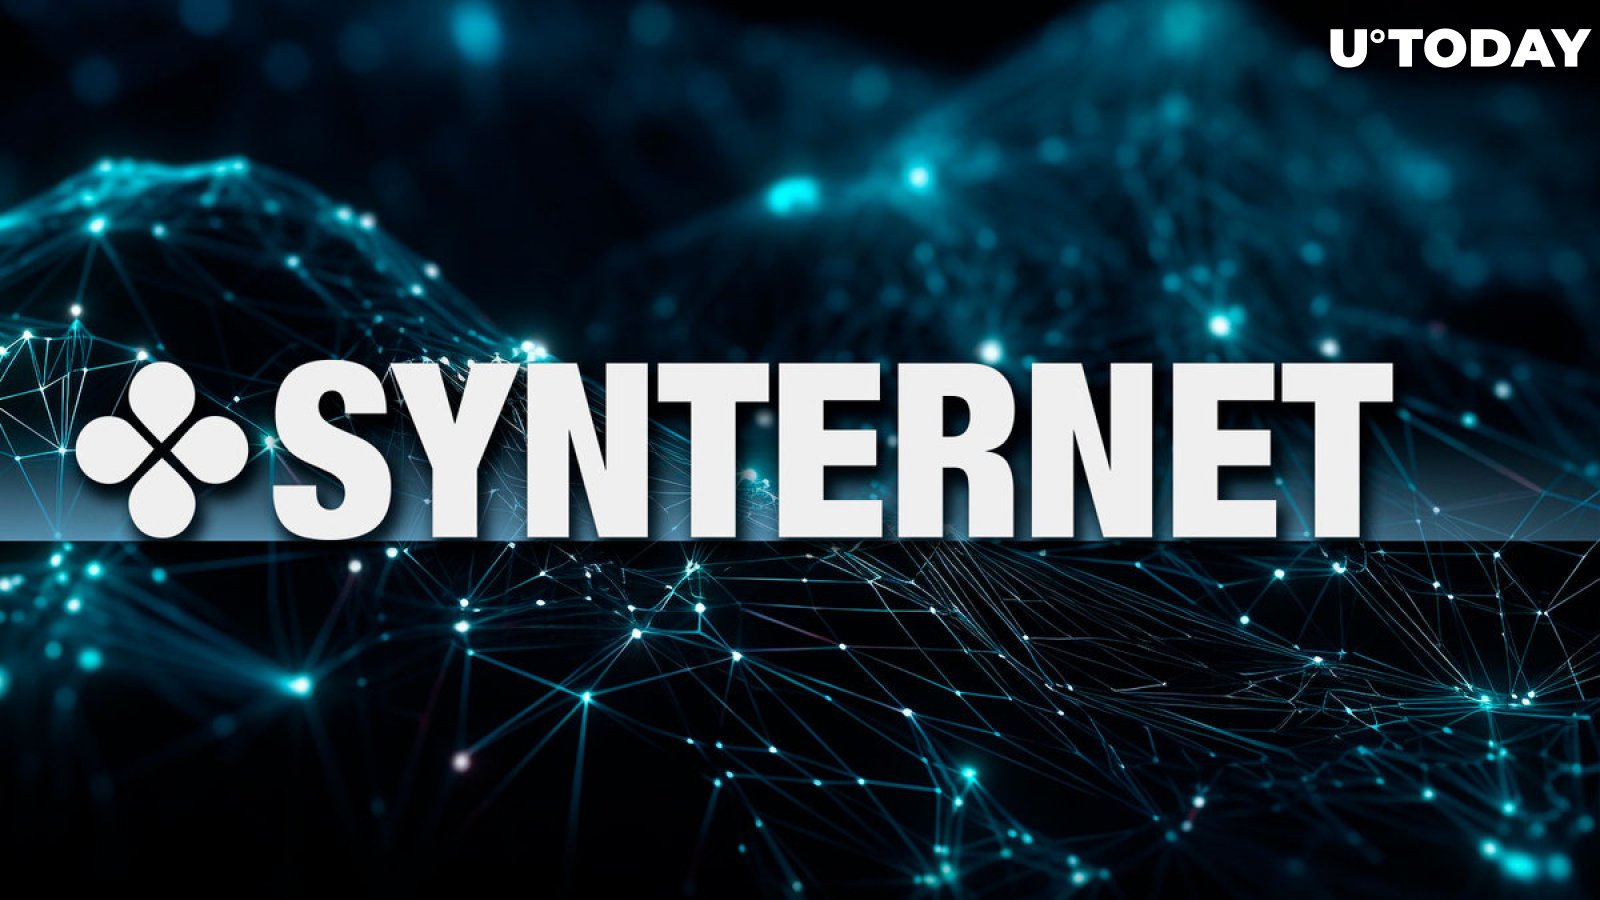 Syntropy Web3 Data Platform Becomes Synternet